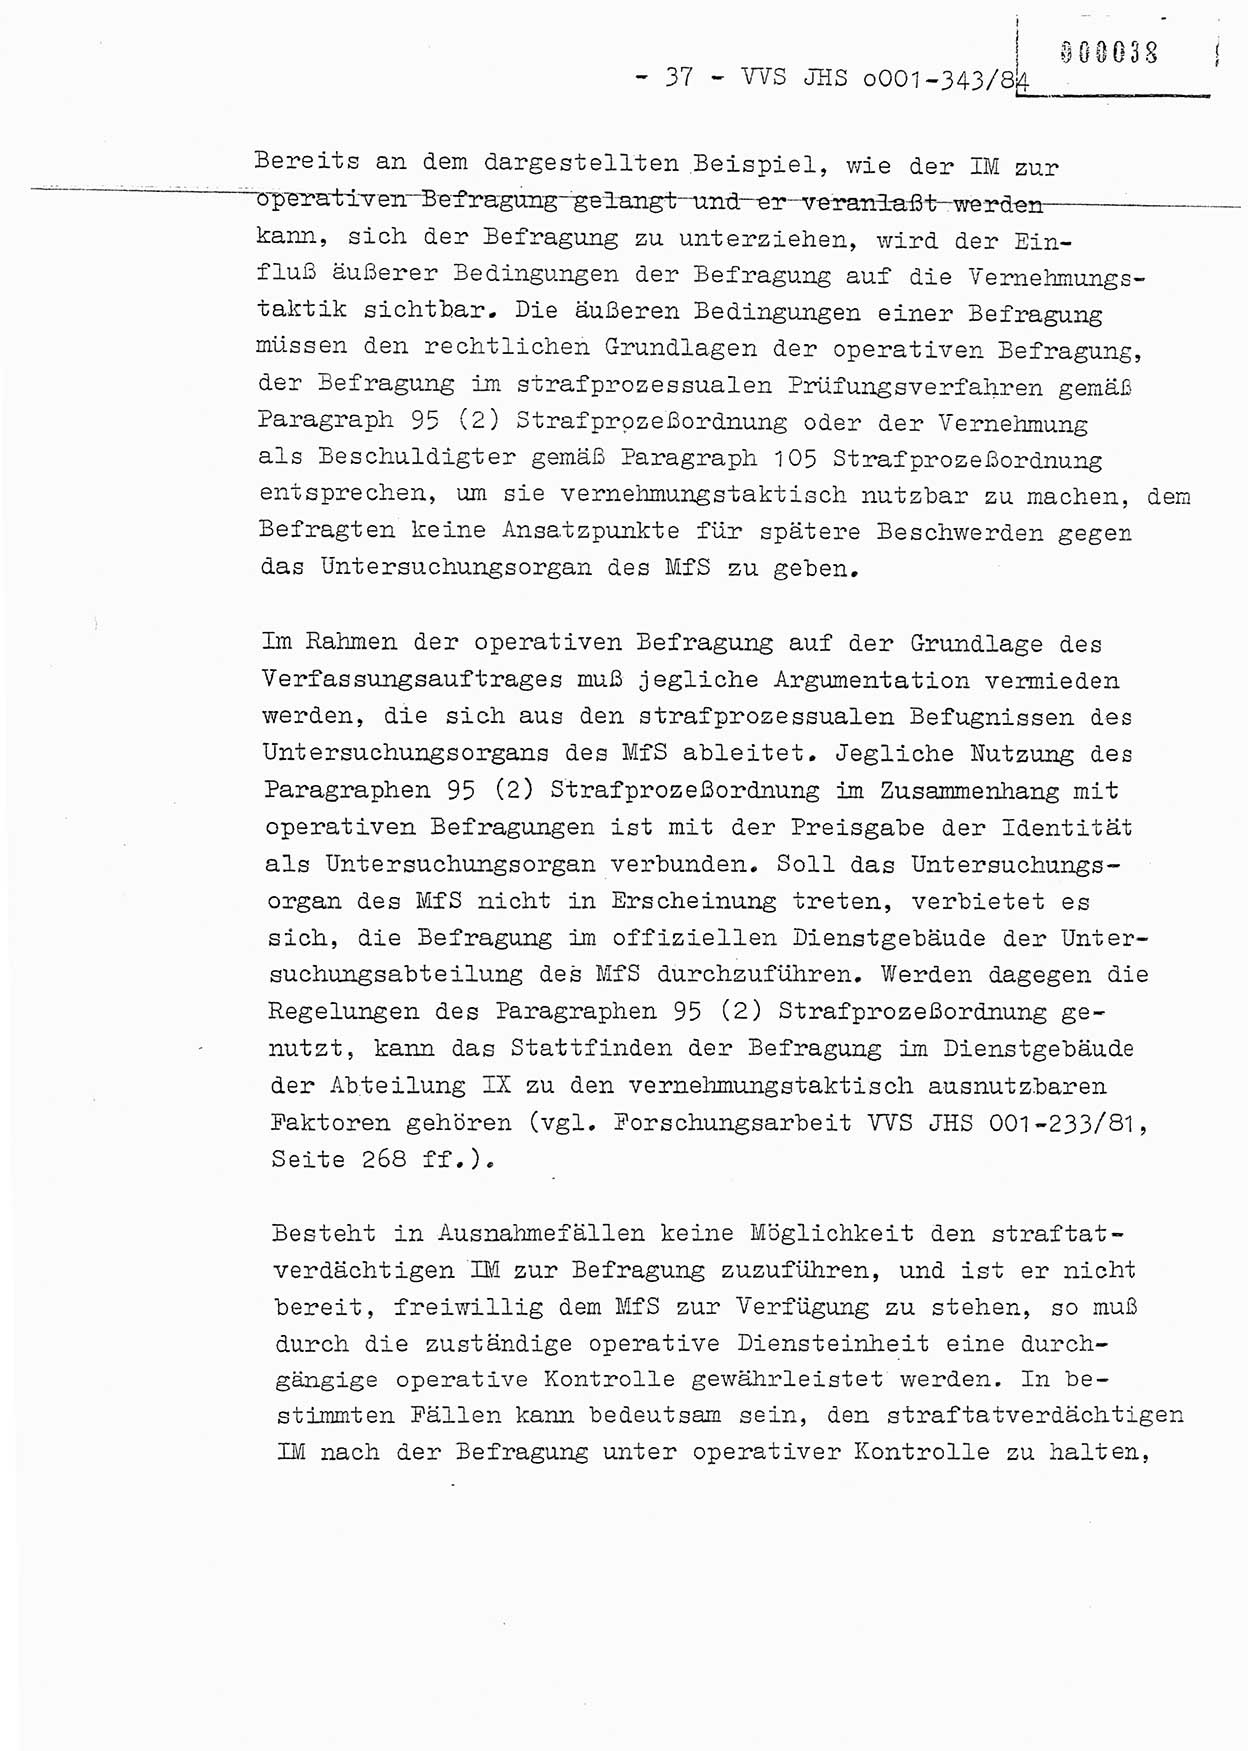 Diplomarbeit, Oberleutnant Bernd Michael (HA Ⅸ/5), Oberleutnant Peter Felber (HA IX/5), Ministerium für Staatssicherheit (MfS) [Deutsche Demokratische Republik (DDR)], Juristische Hochschule (JHS), Vertrauliche Verschlußsache (VVS) o001-343/84, Potsdam 1985, Seite 37 (Dipl.-Arb. MfS DDR JHS VVS o001-343/84 1985, S. 37)